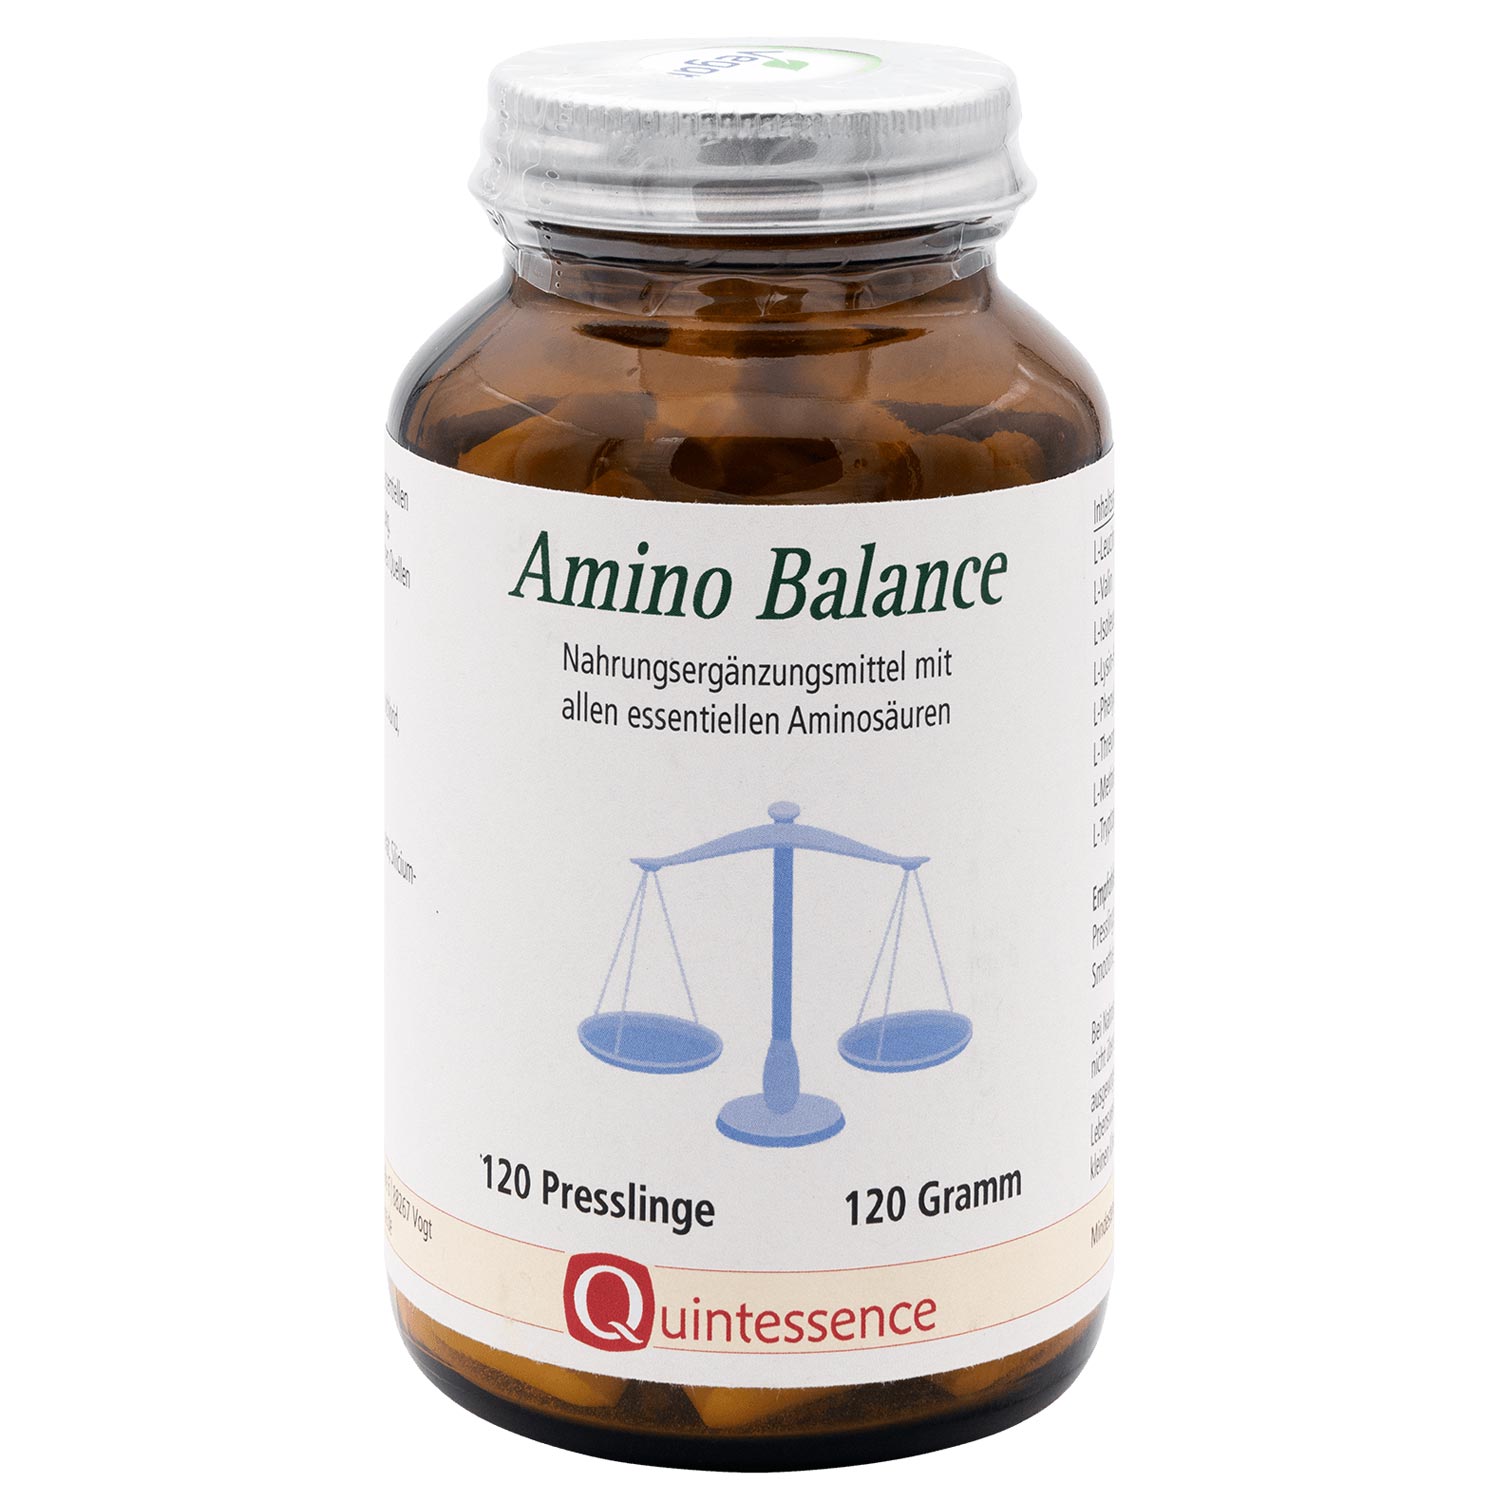 Amino Balance Kapseln von Quintessence Naturprodukte - 120 Presslinge